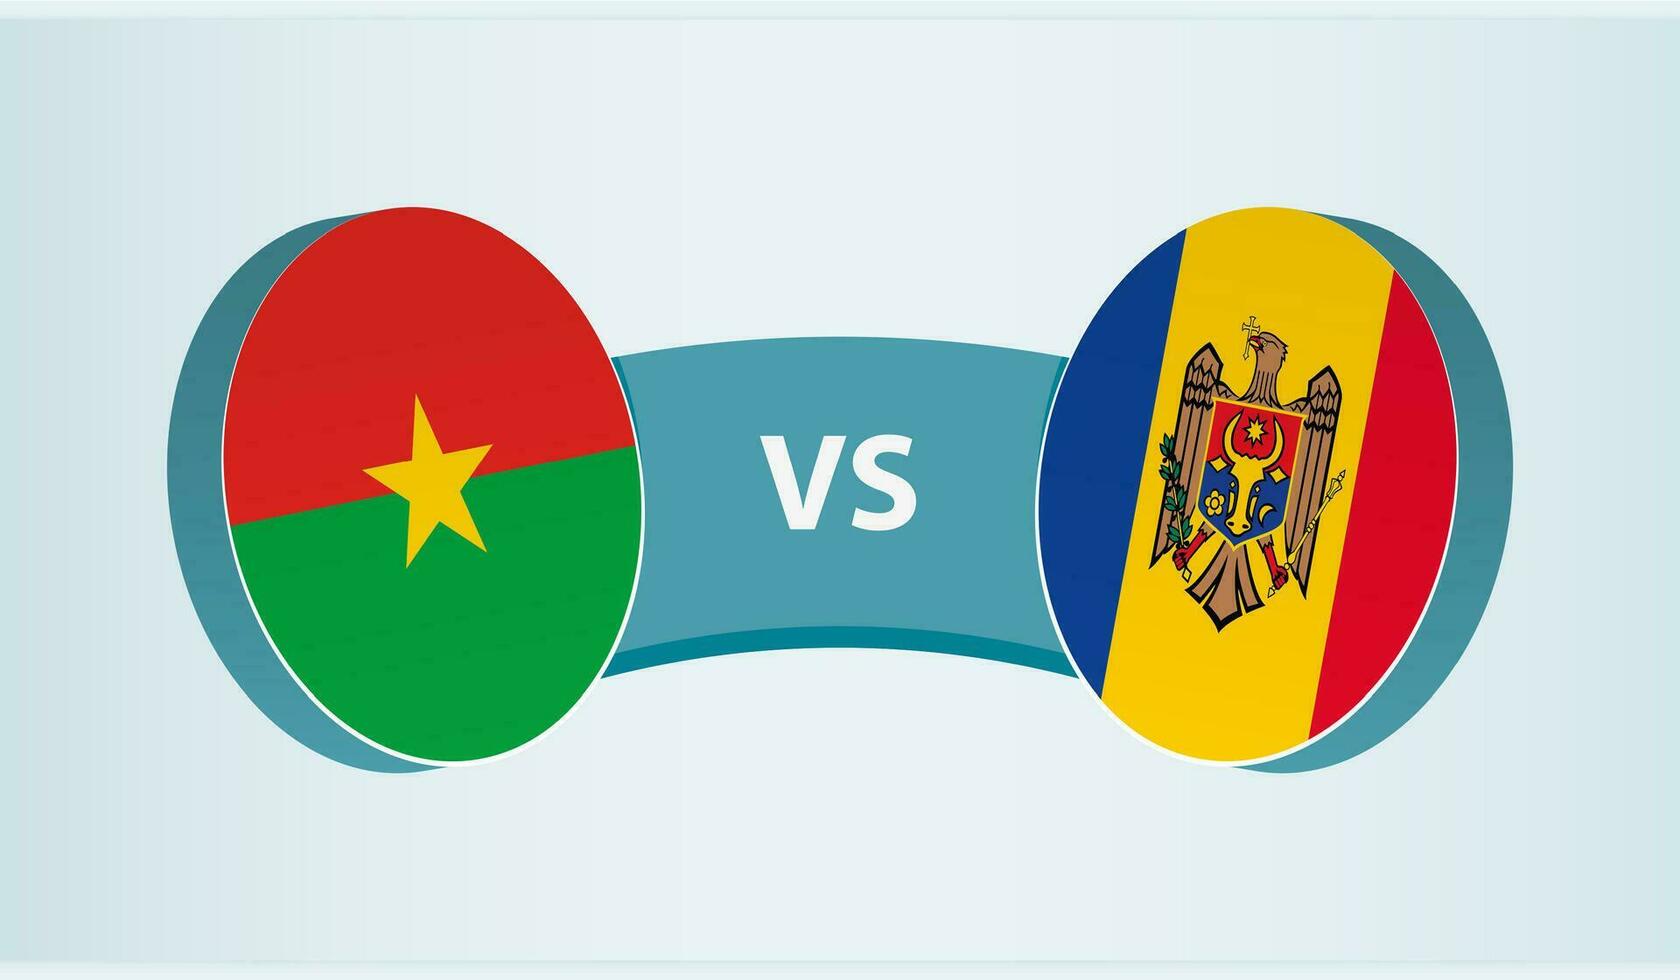 Burkina Faso versus Moldova, team sports competition concept. vector